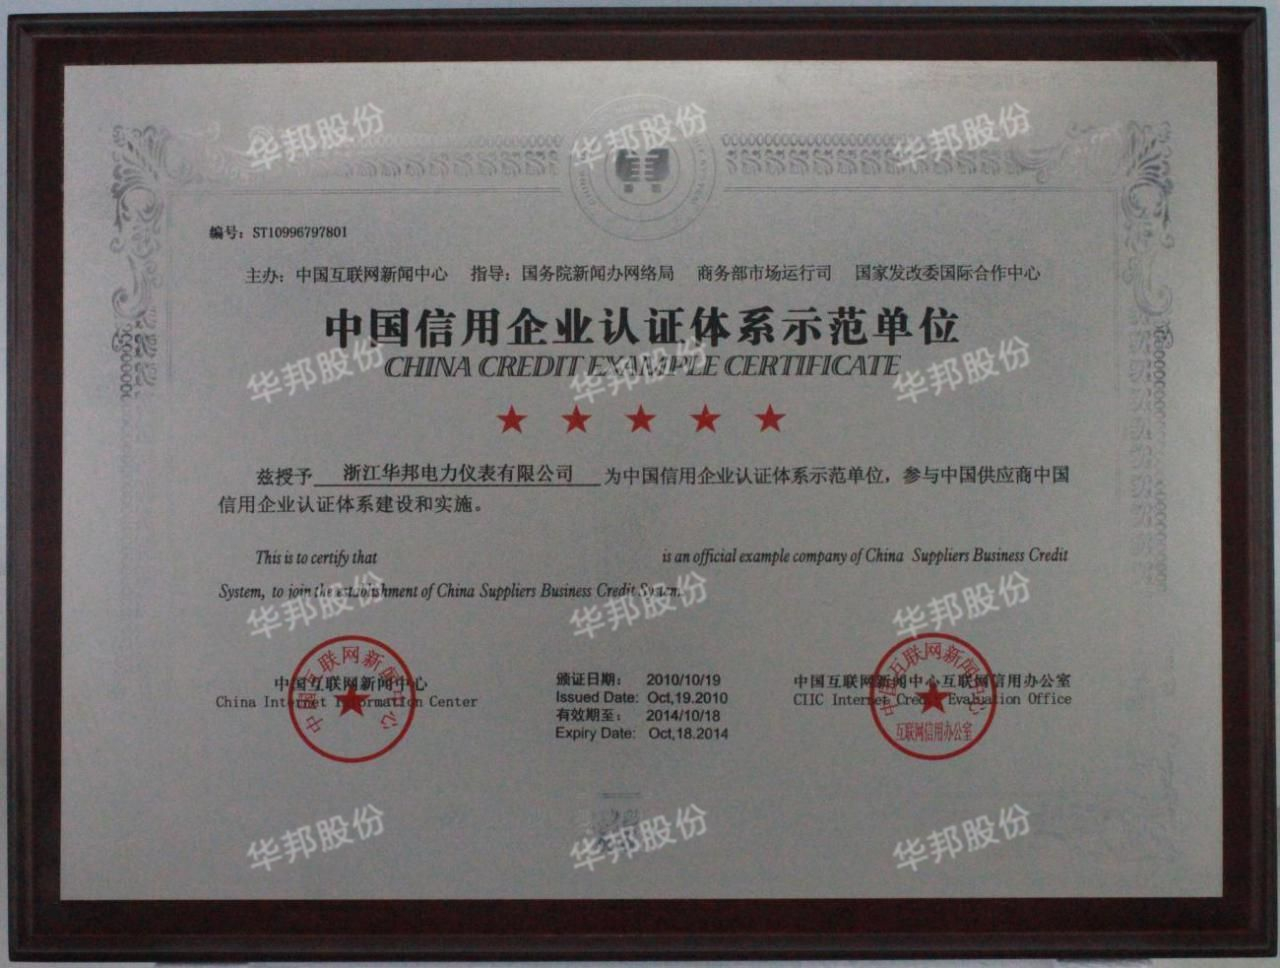 China credit enterprise certification system model unit